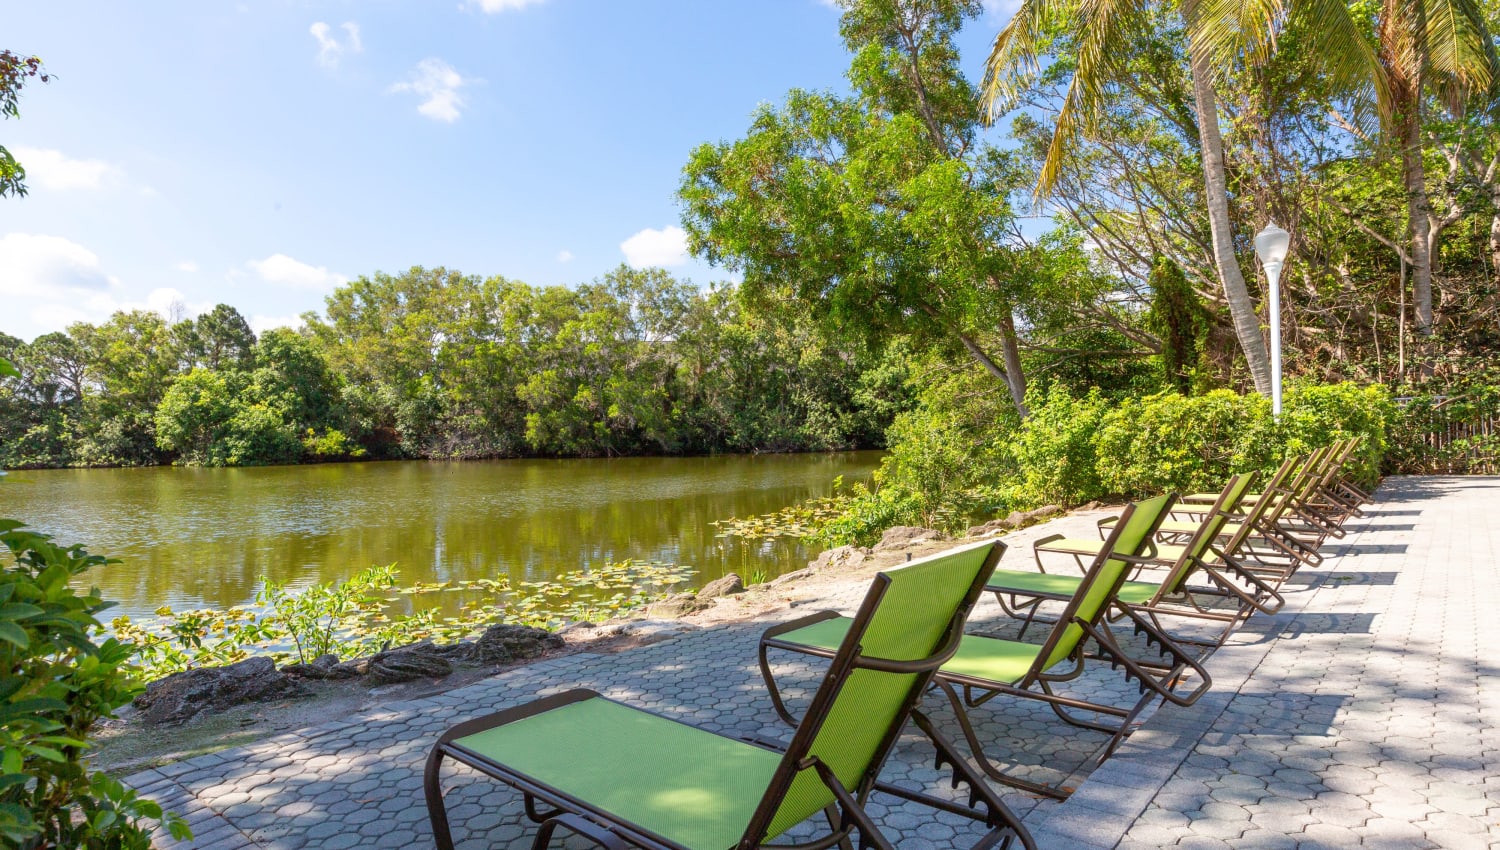 Pool seating facing the lake at Quantum Lake Villas Apartments in Boynton Beach, Florida